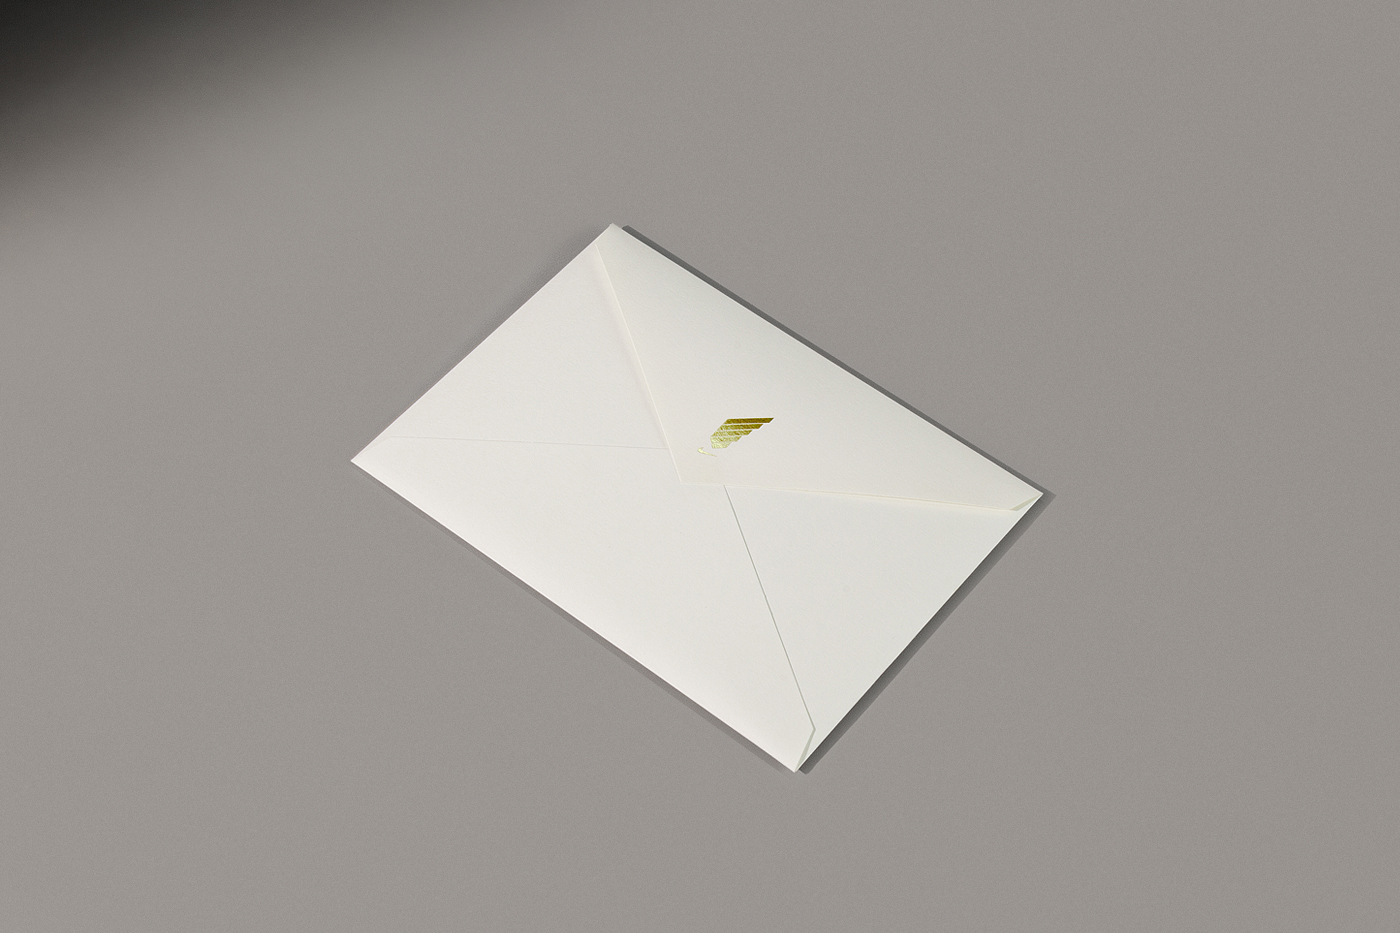 Nike Happycentro kirigami papercut invite